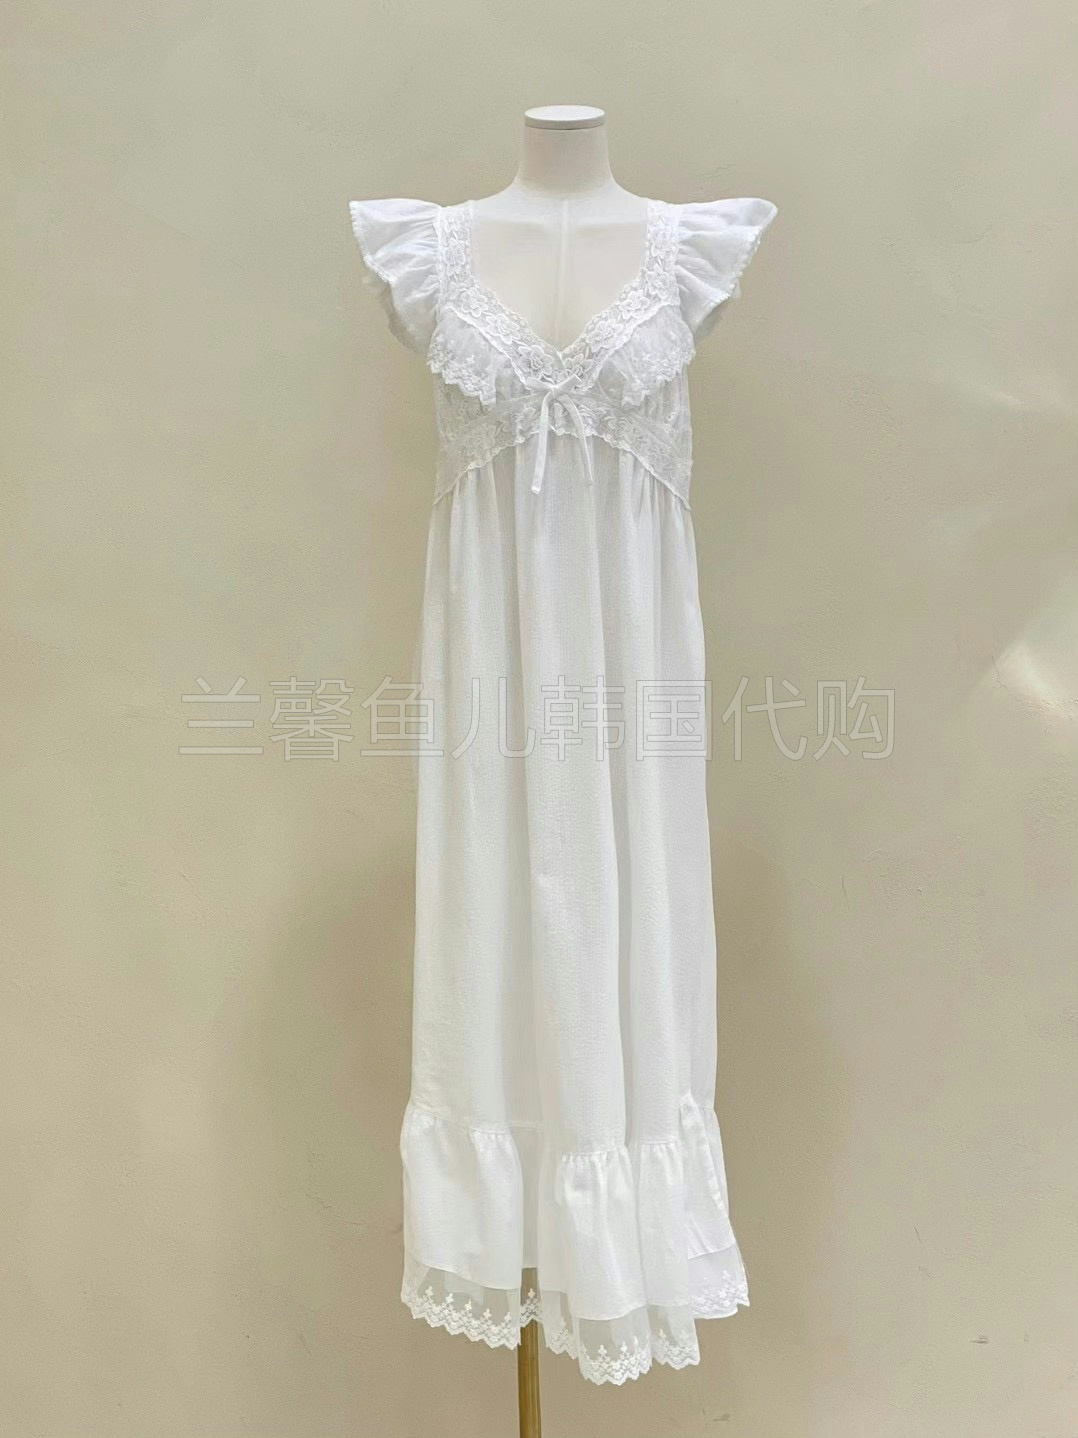 LUNALUZ棉夏季甜美韩国吊带睡裙